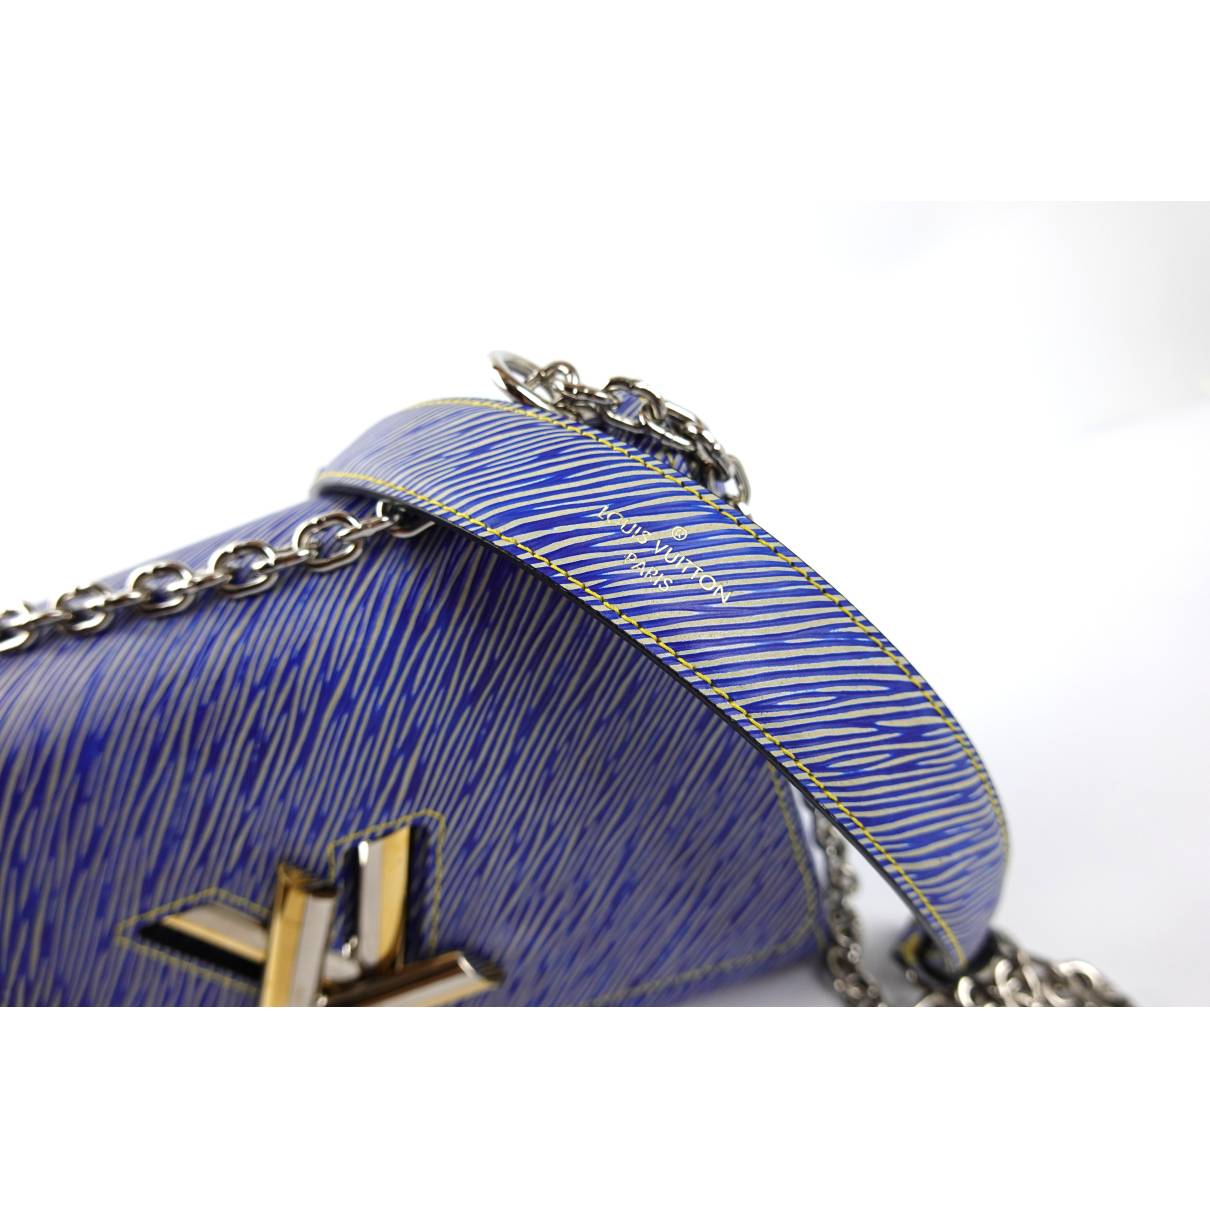 Louis Vuitton Twist Medium Model Handbag in Blue Jean Epi Leather